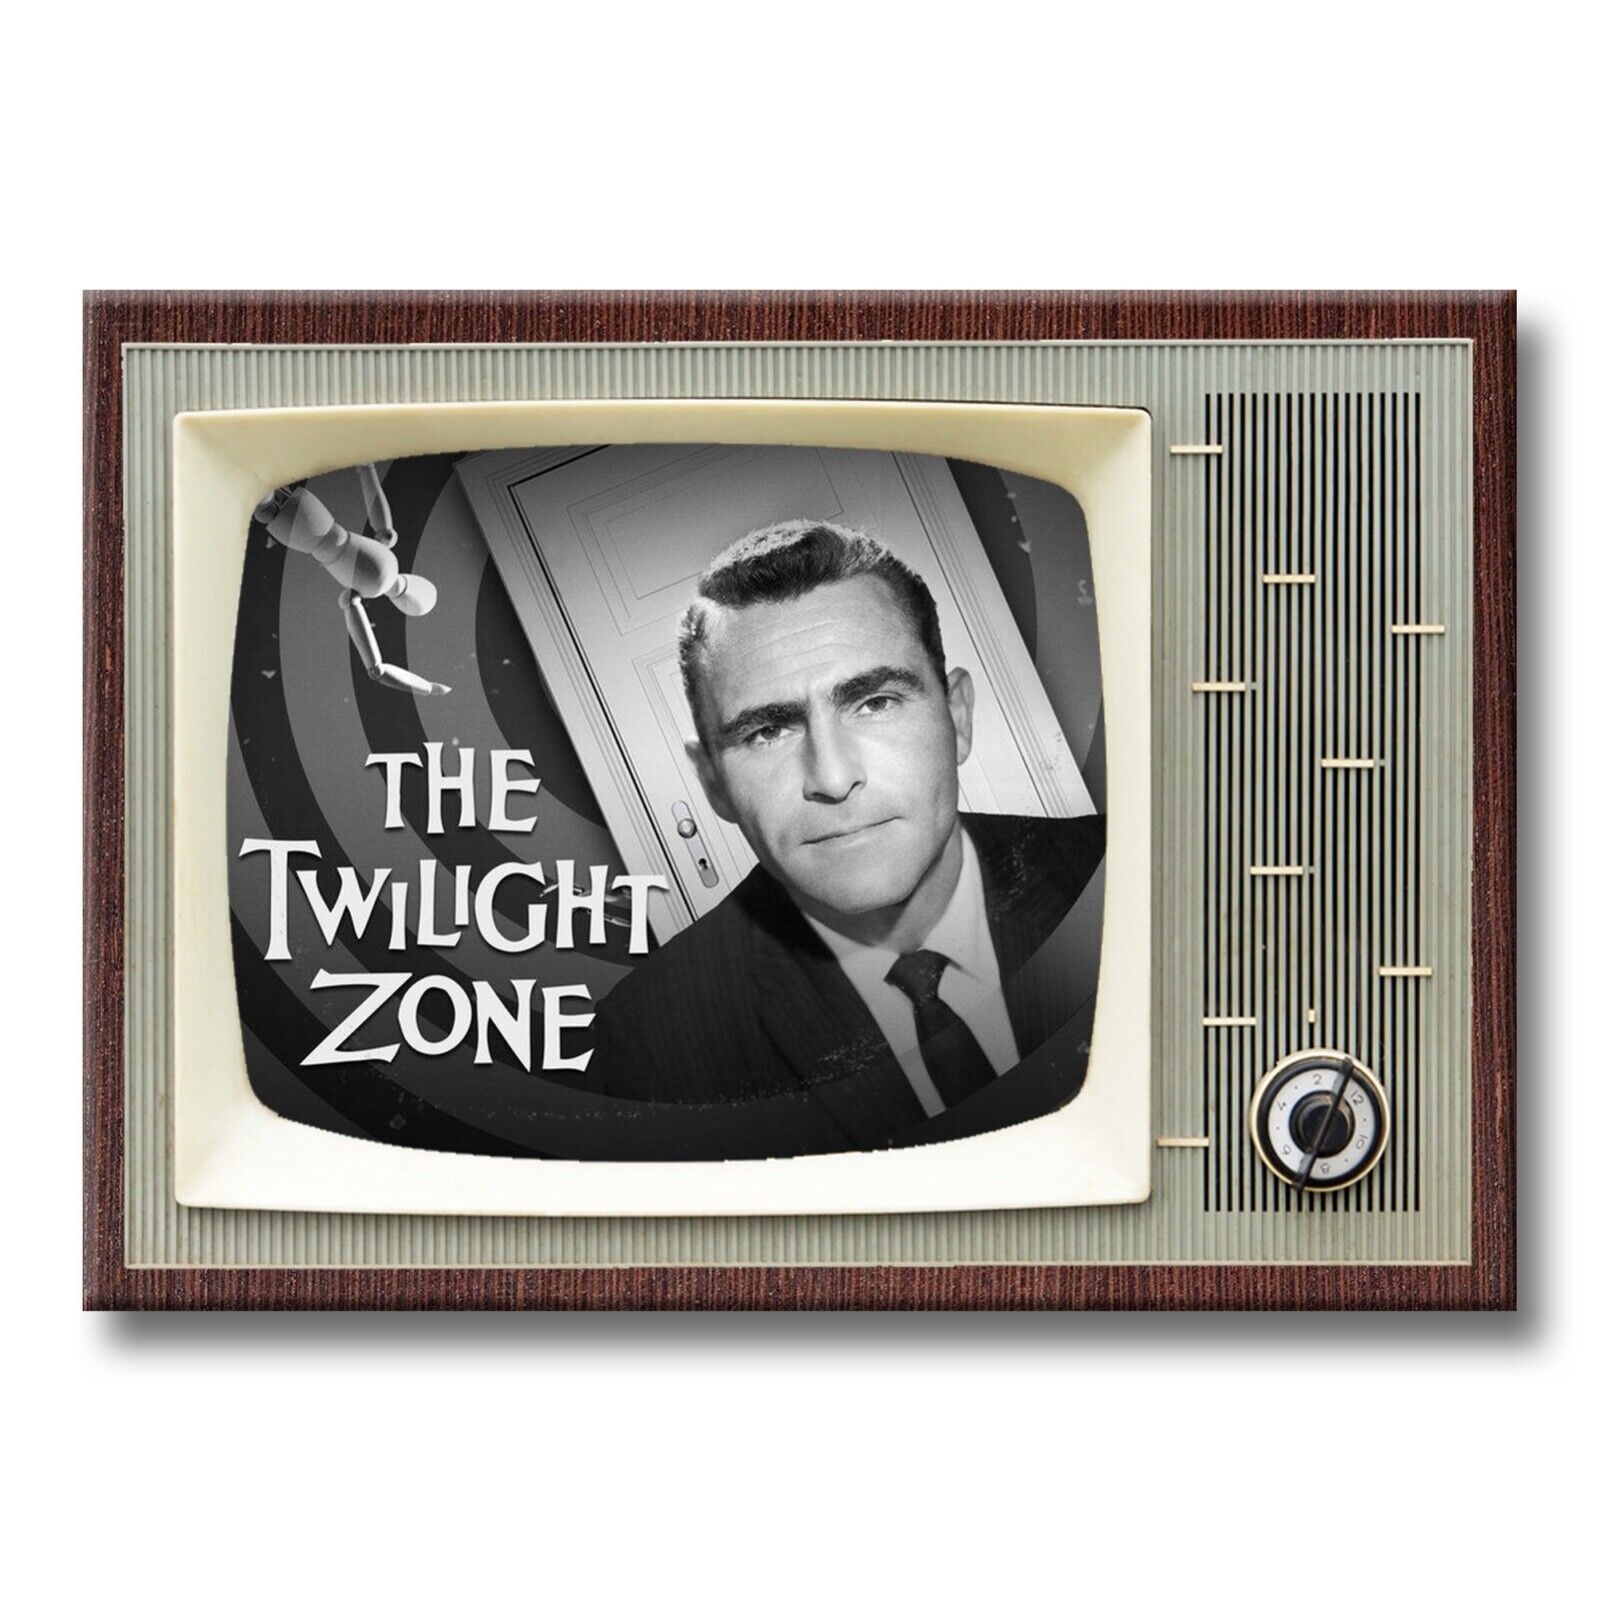 Twilight Zone TV Show Classic TV 3.5 inches x 2.5 inches Steel Fridge Magnet